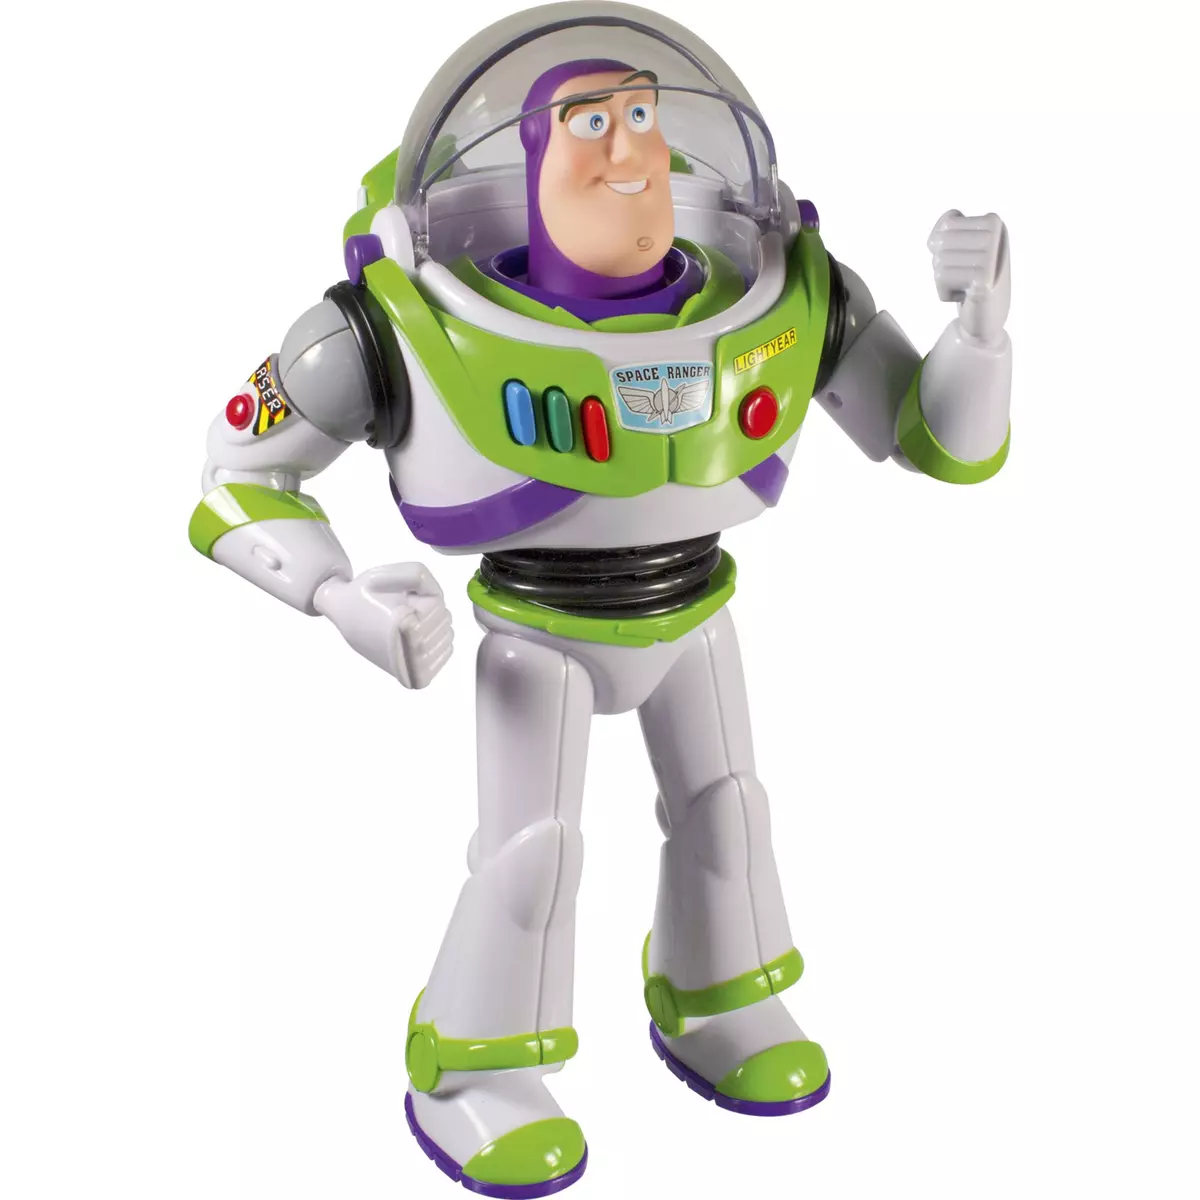 LANSAY Figurine parlante Toy Story 4 Buzz l'éclair